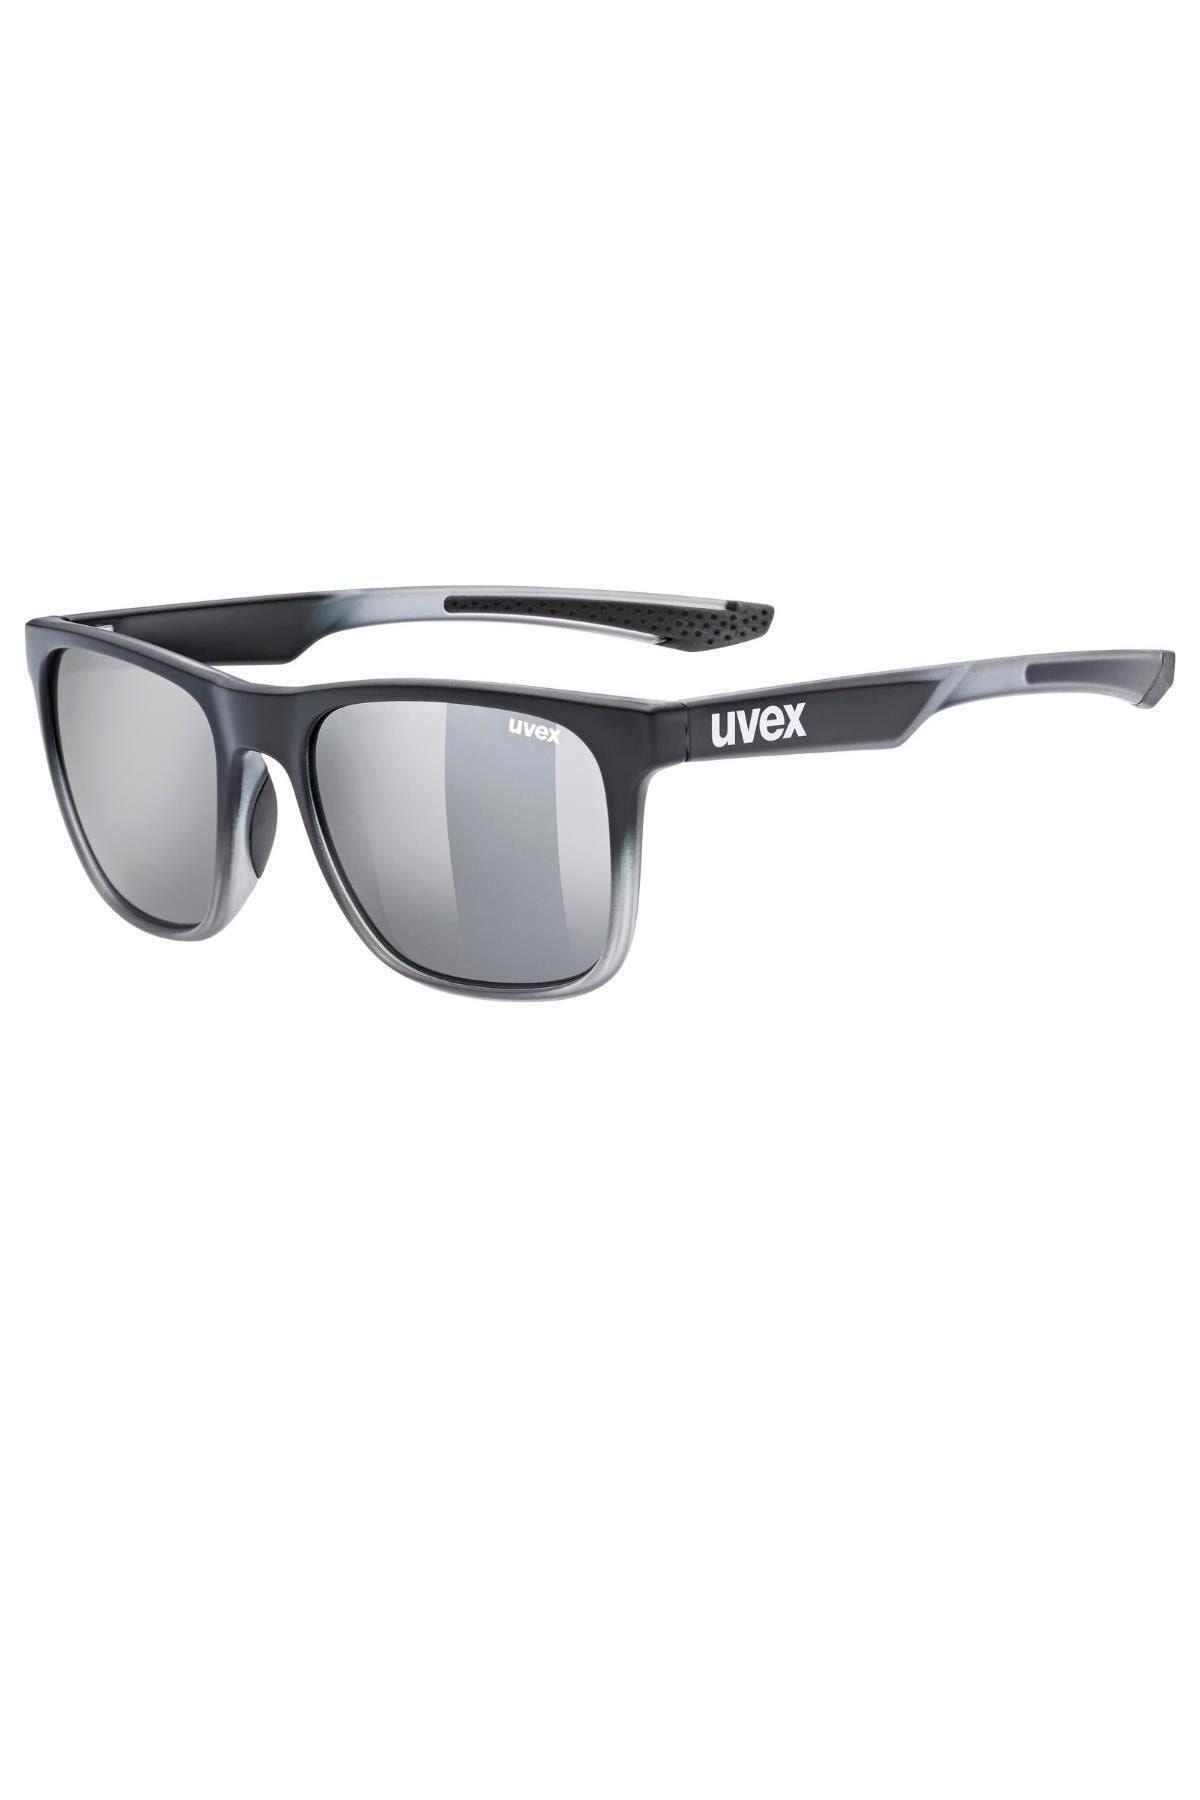 Uvex Lgl 42 Black Transparent/mir.silver Güneş Gözlüğü